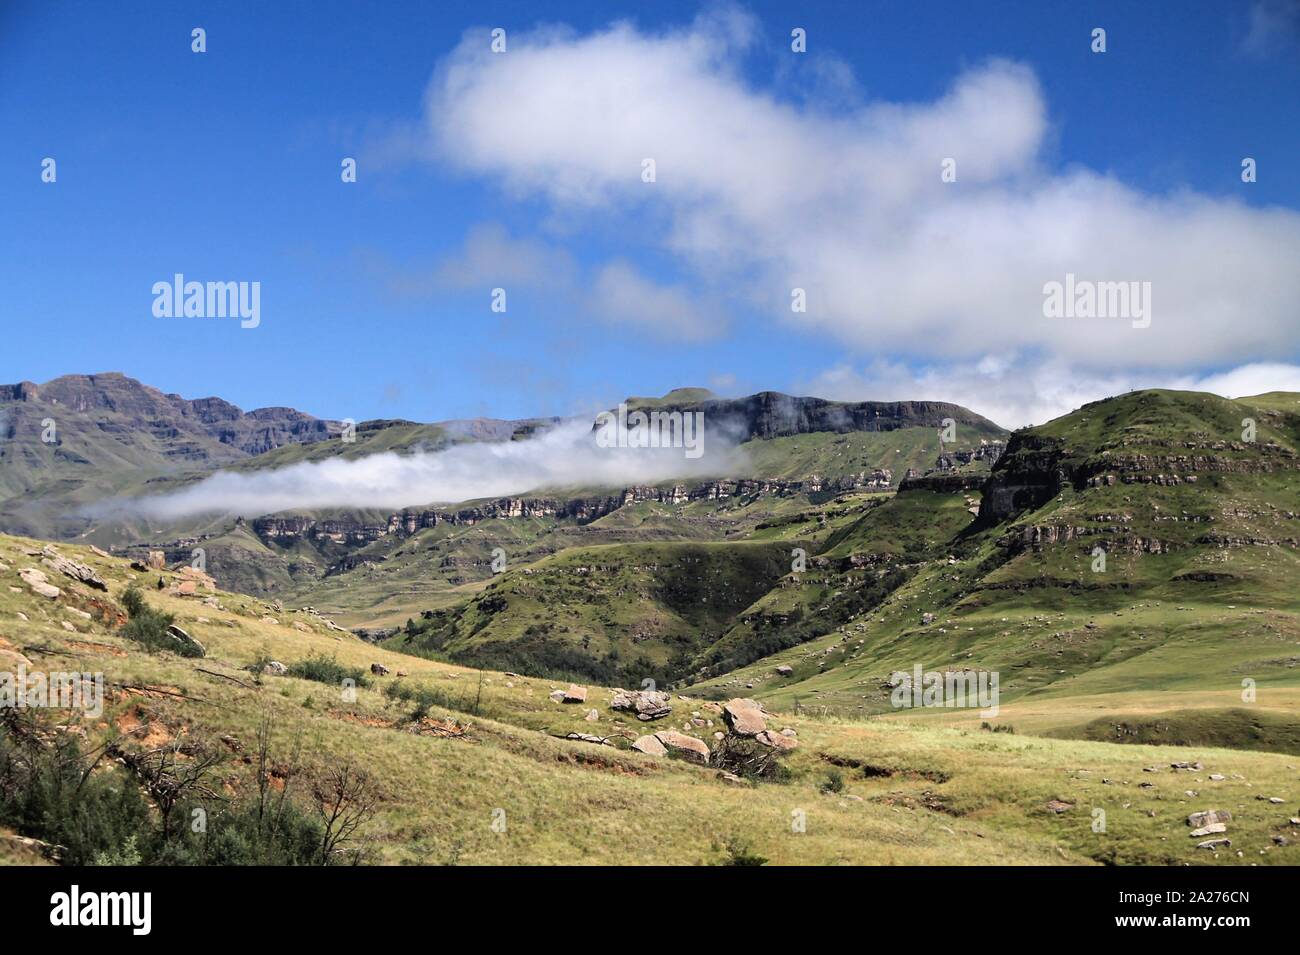 Grünes Gebirge in den Wolken Foto Stock